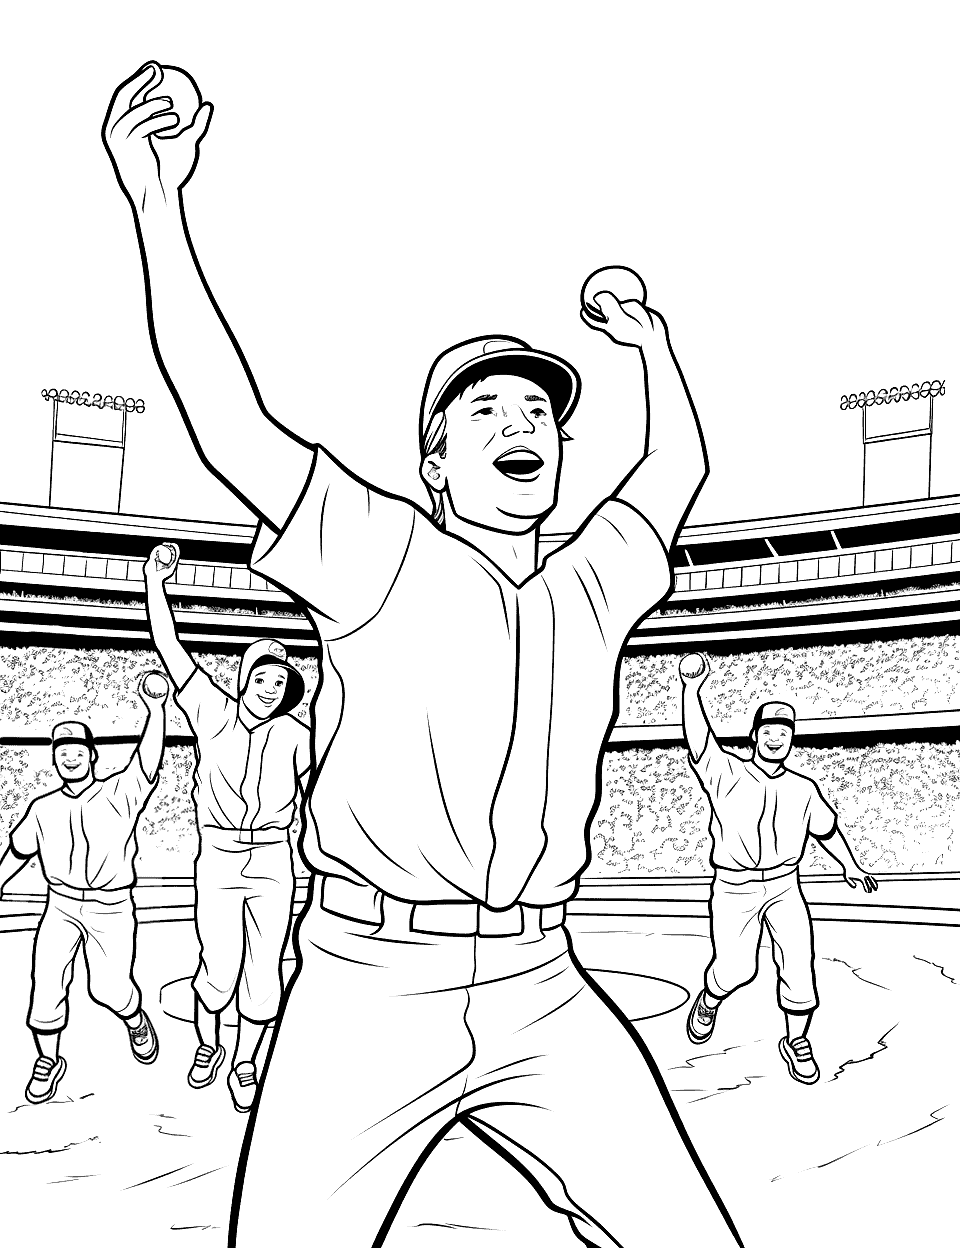 Grand Slam Celebration Baseball Coloring Page - Players celebrating a grand slam, teammates cheering.